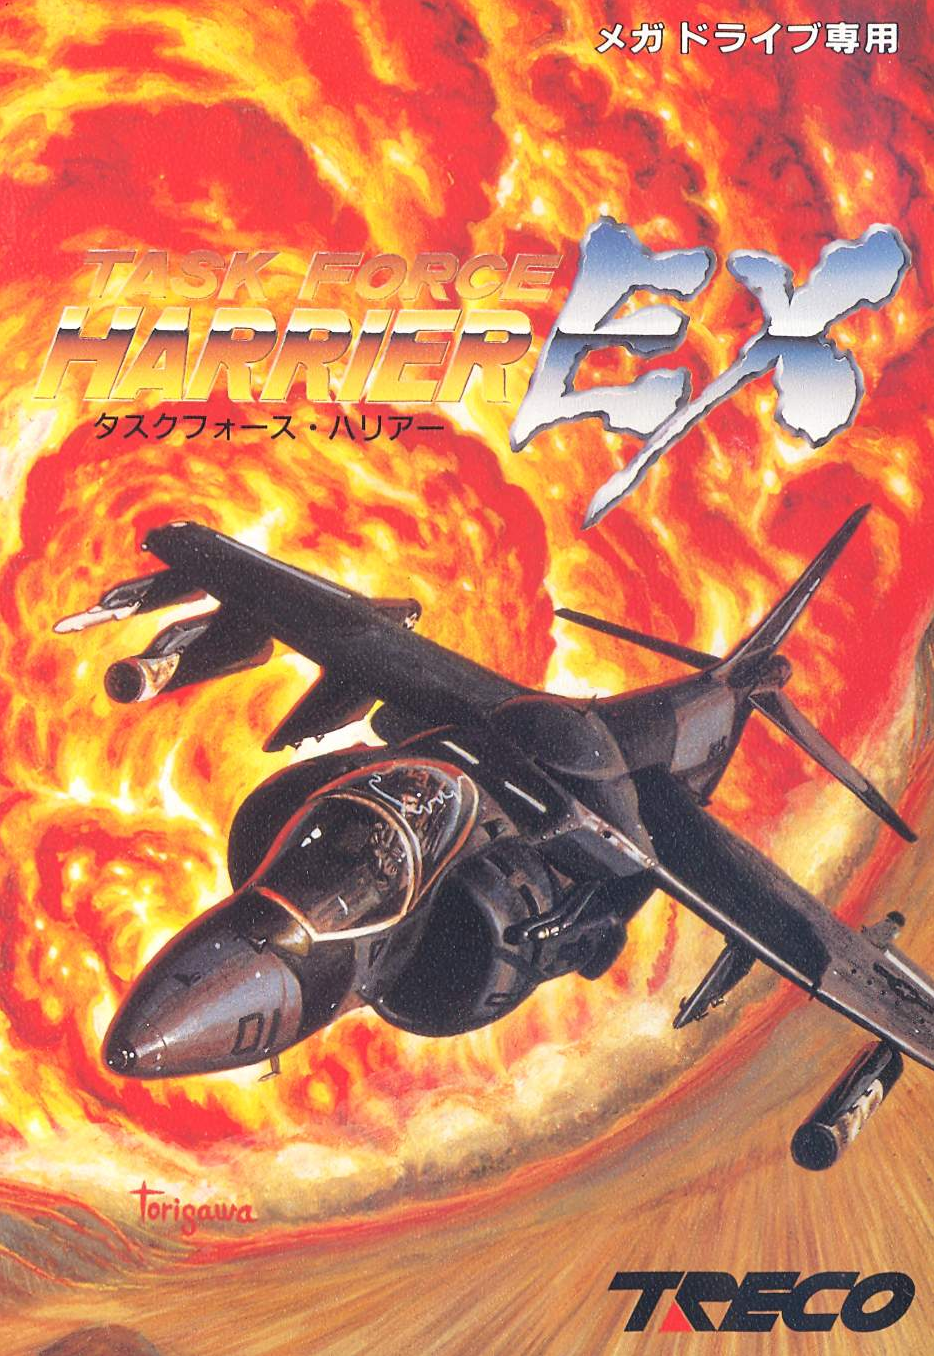 Task Force Harrier EX for Sega Mega Drive / Sega Genesis